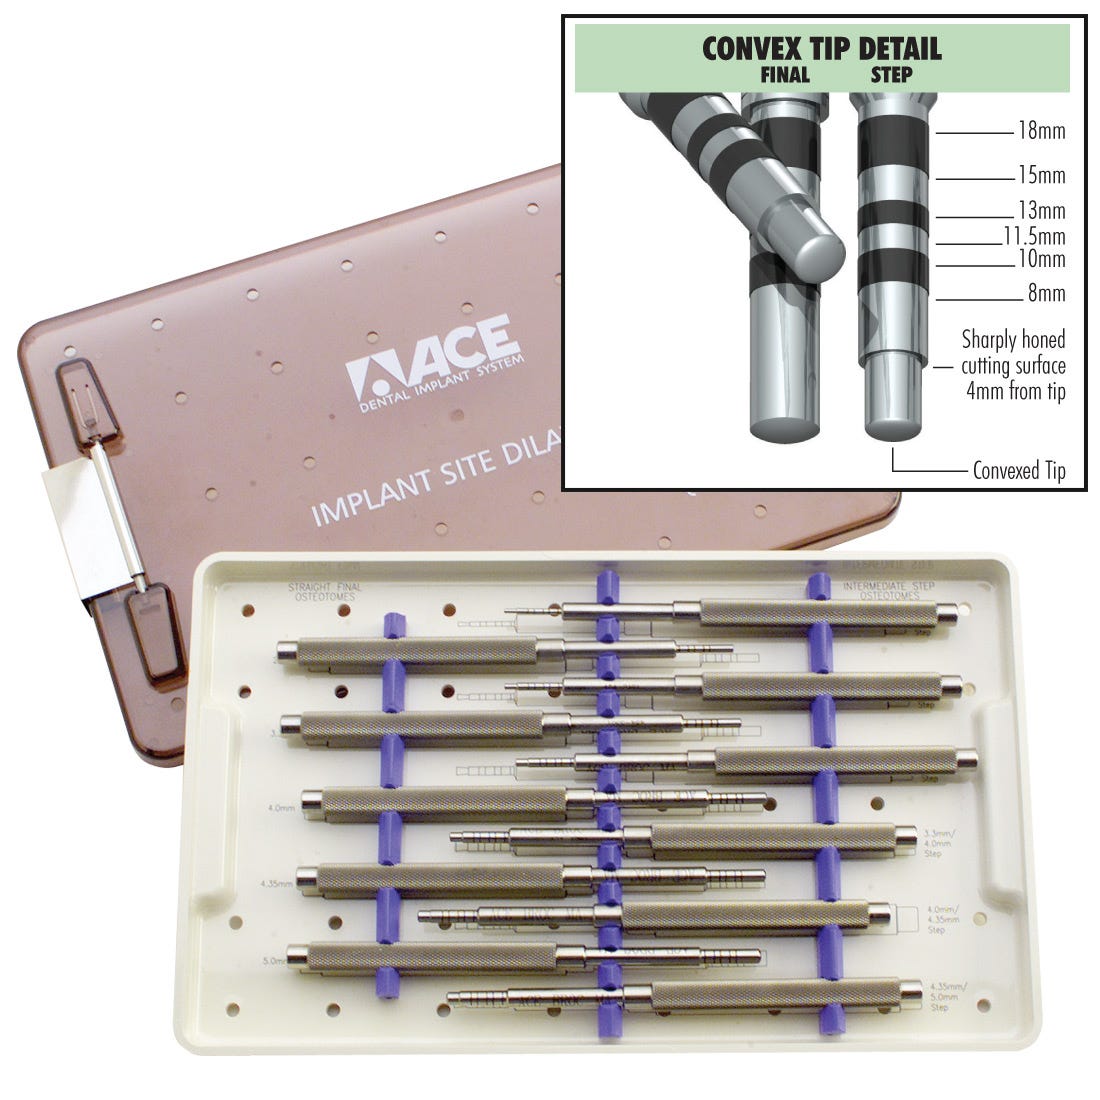 ACE Implant Site Dilator Kit- set of 11 dilators-convex tips